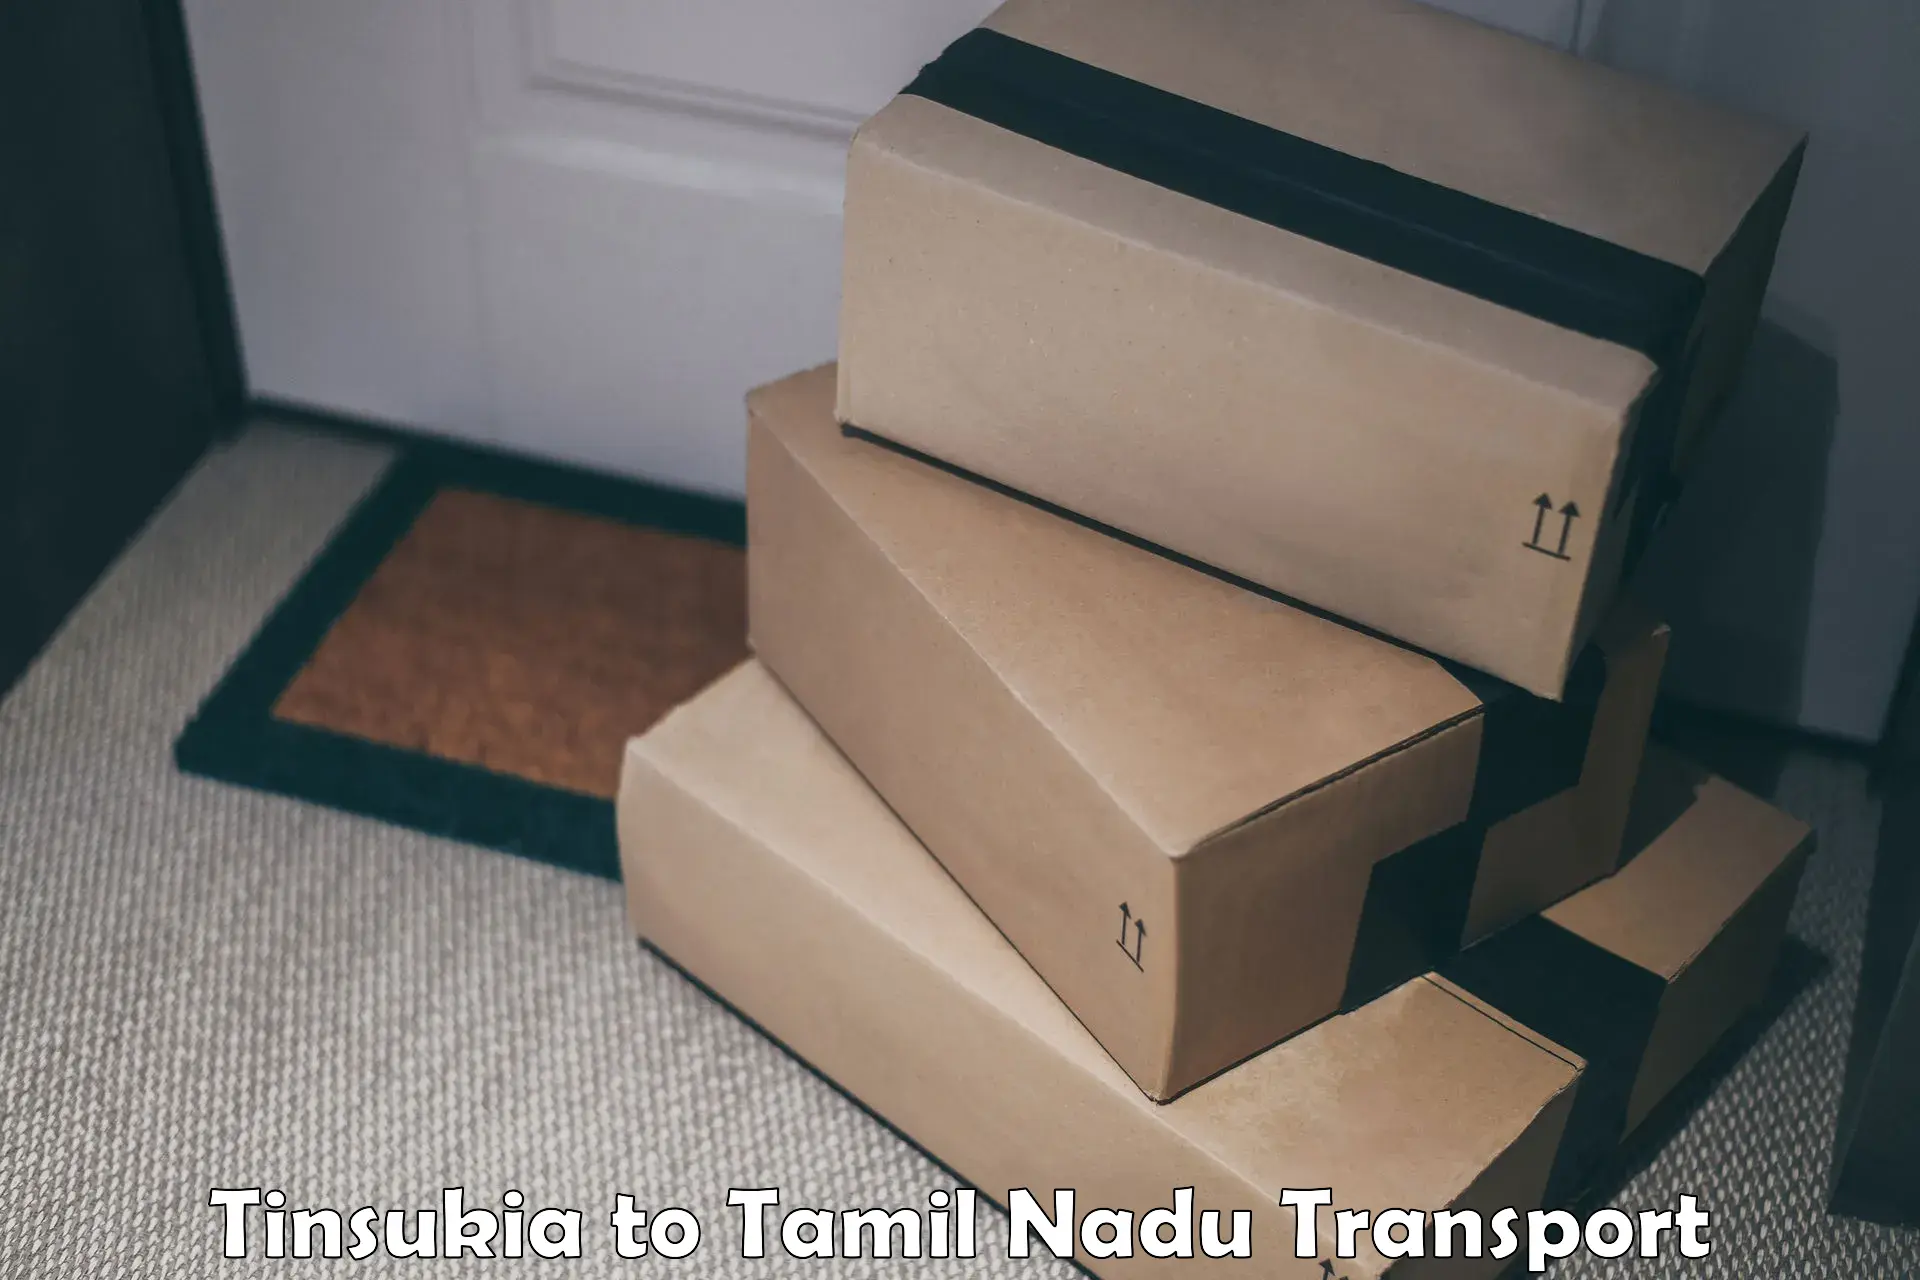 Domestic goods transportation services Tinsukia to Ennore Port Chennai